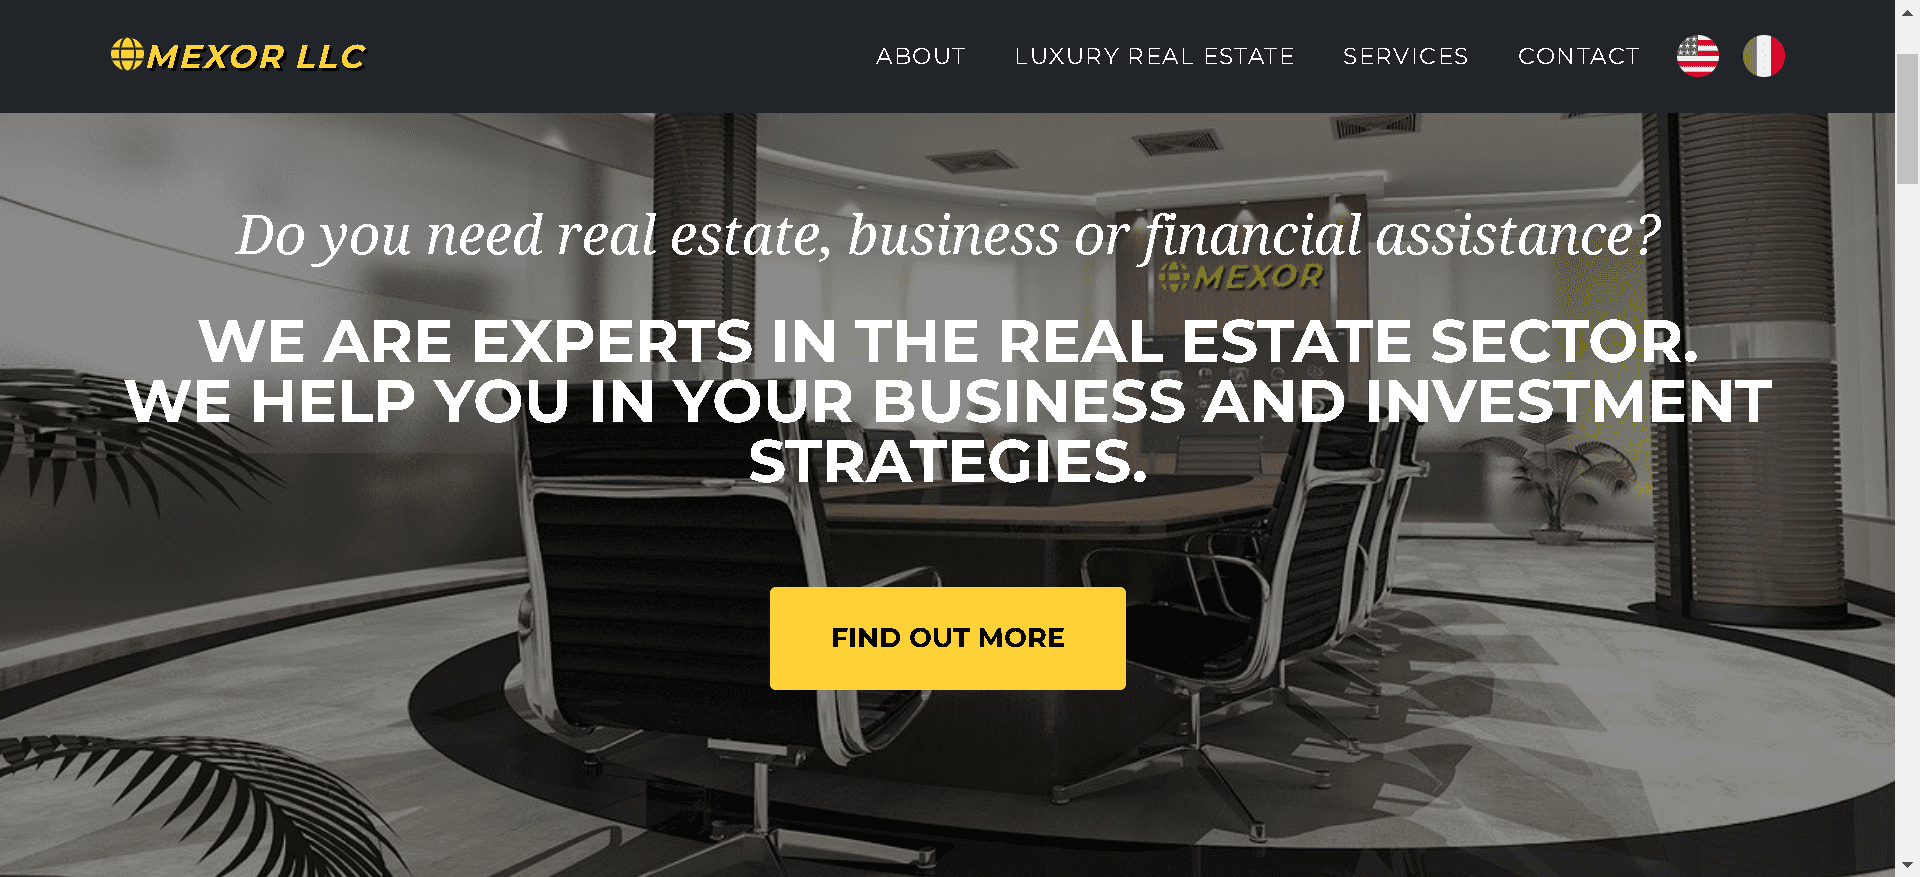 Presentation website for a real estate sales company in Delaware, USA